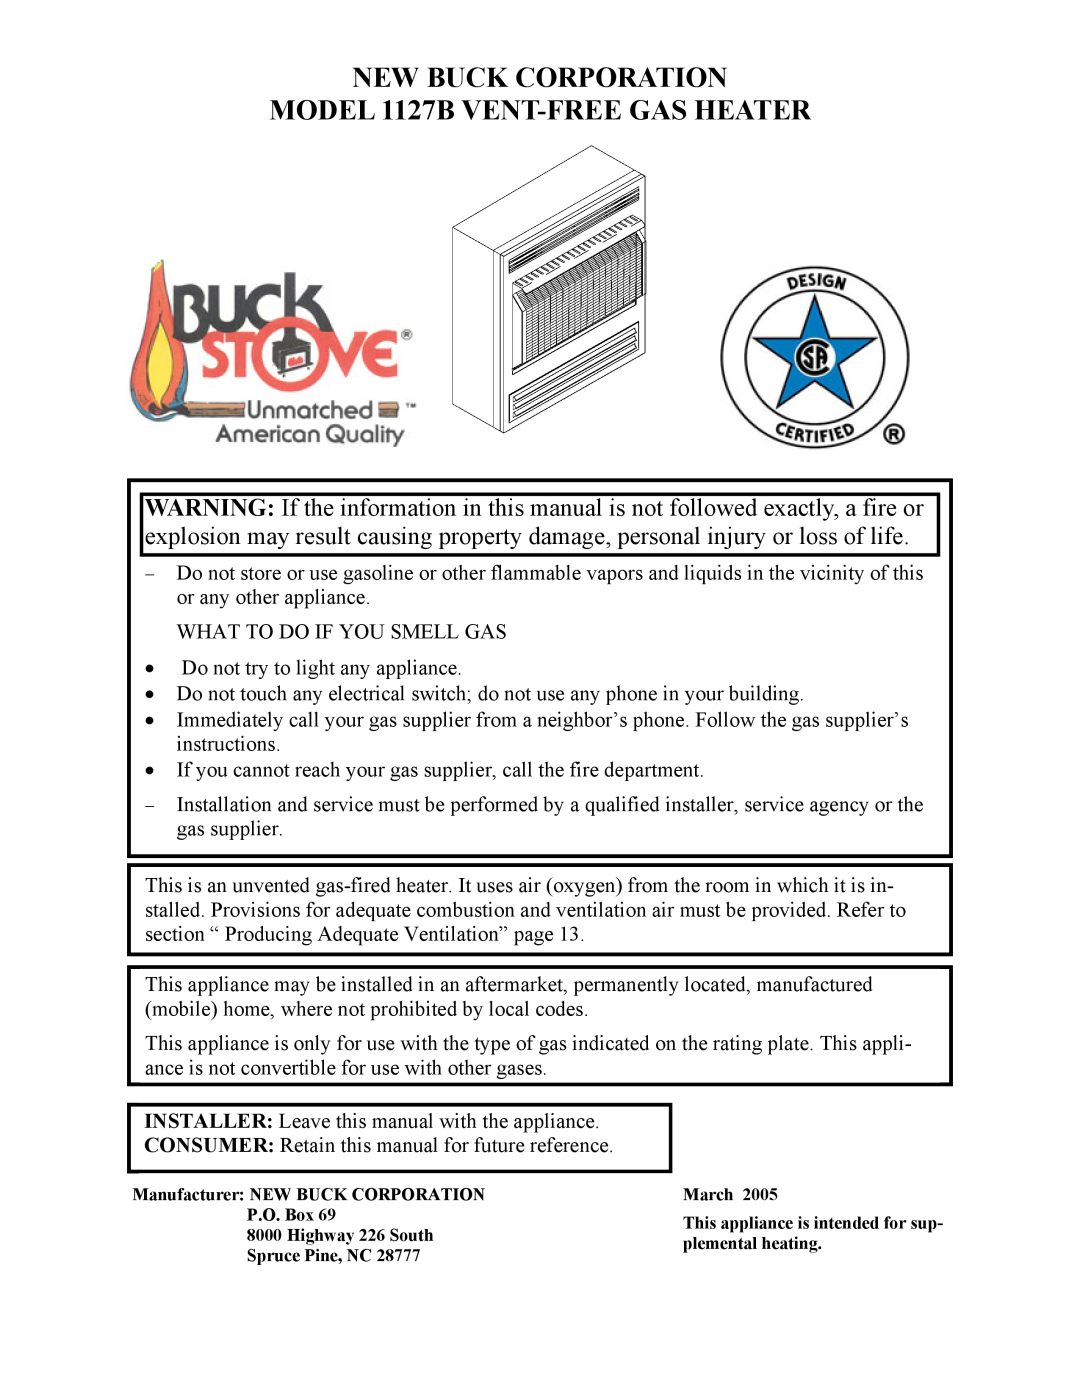 New Buck Corporation manual New Buck Corporation, MODEL 1127B VENT-FREEGAS HEATER, Highway 226 South Spruce Pine, NC 